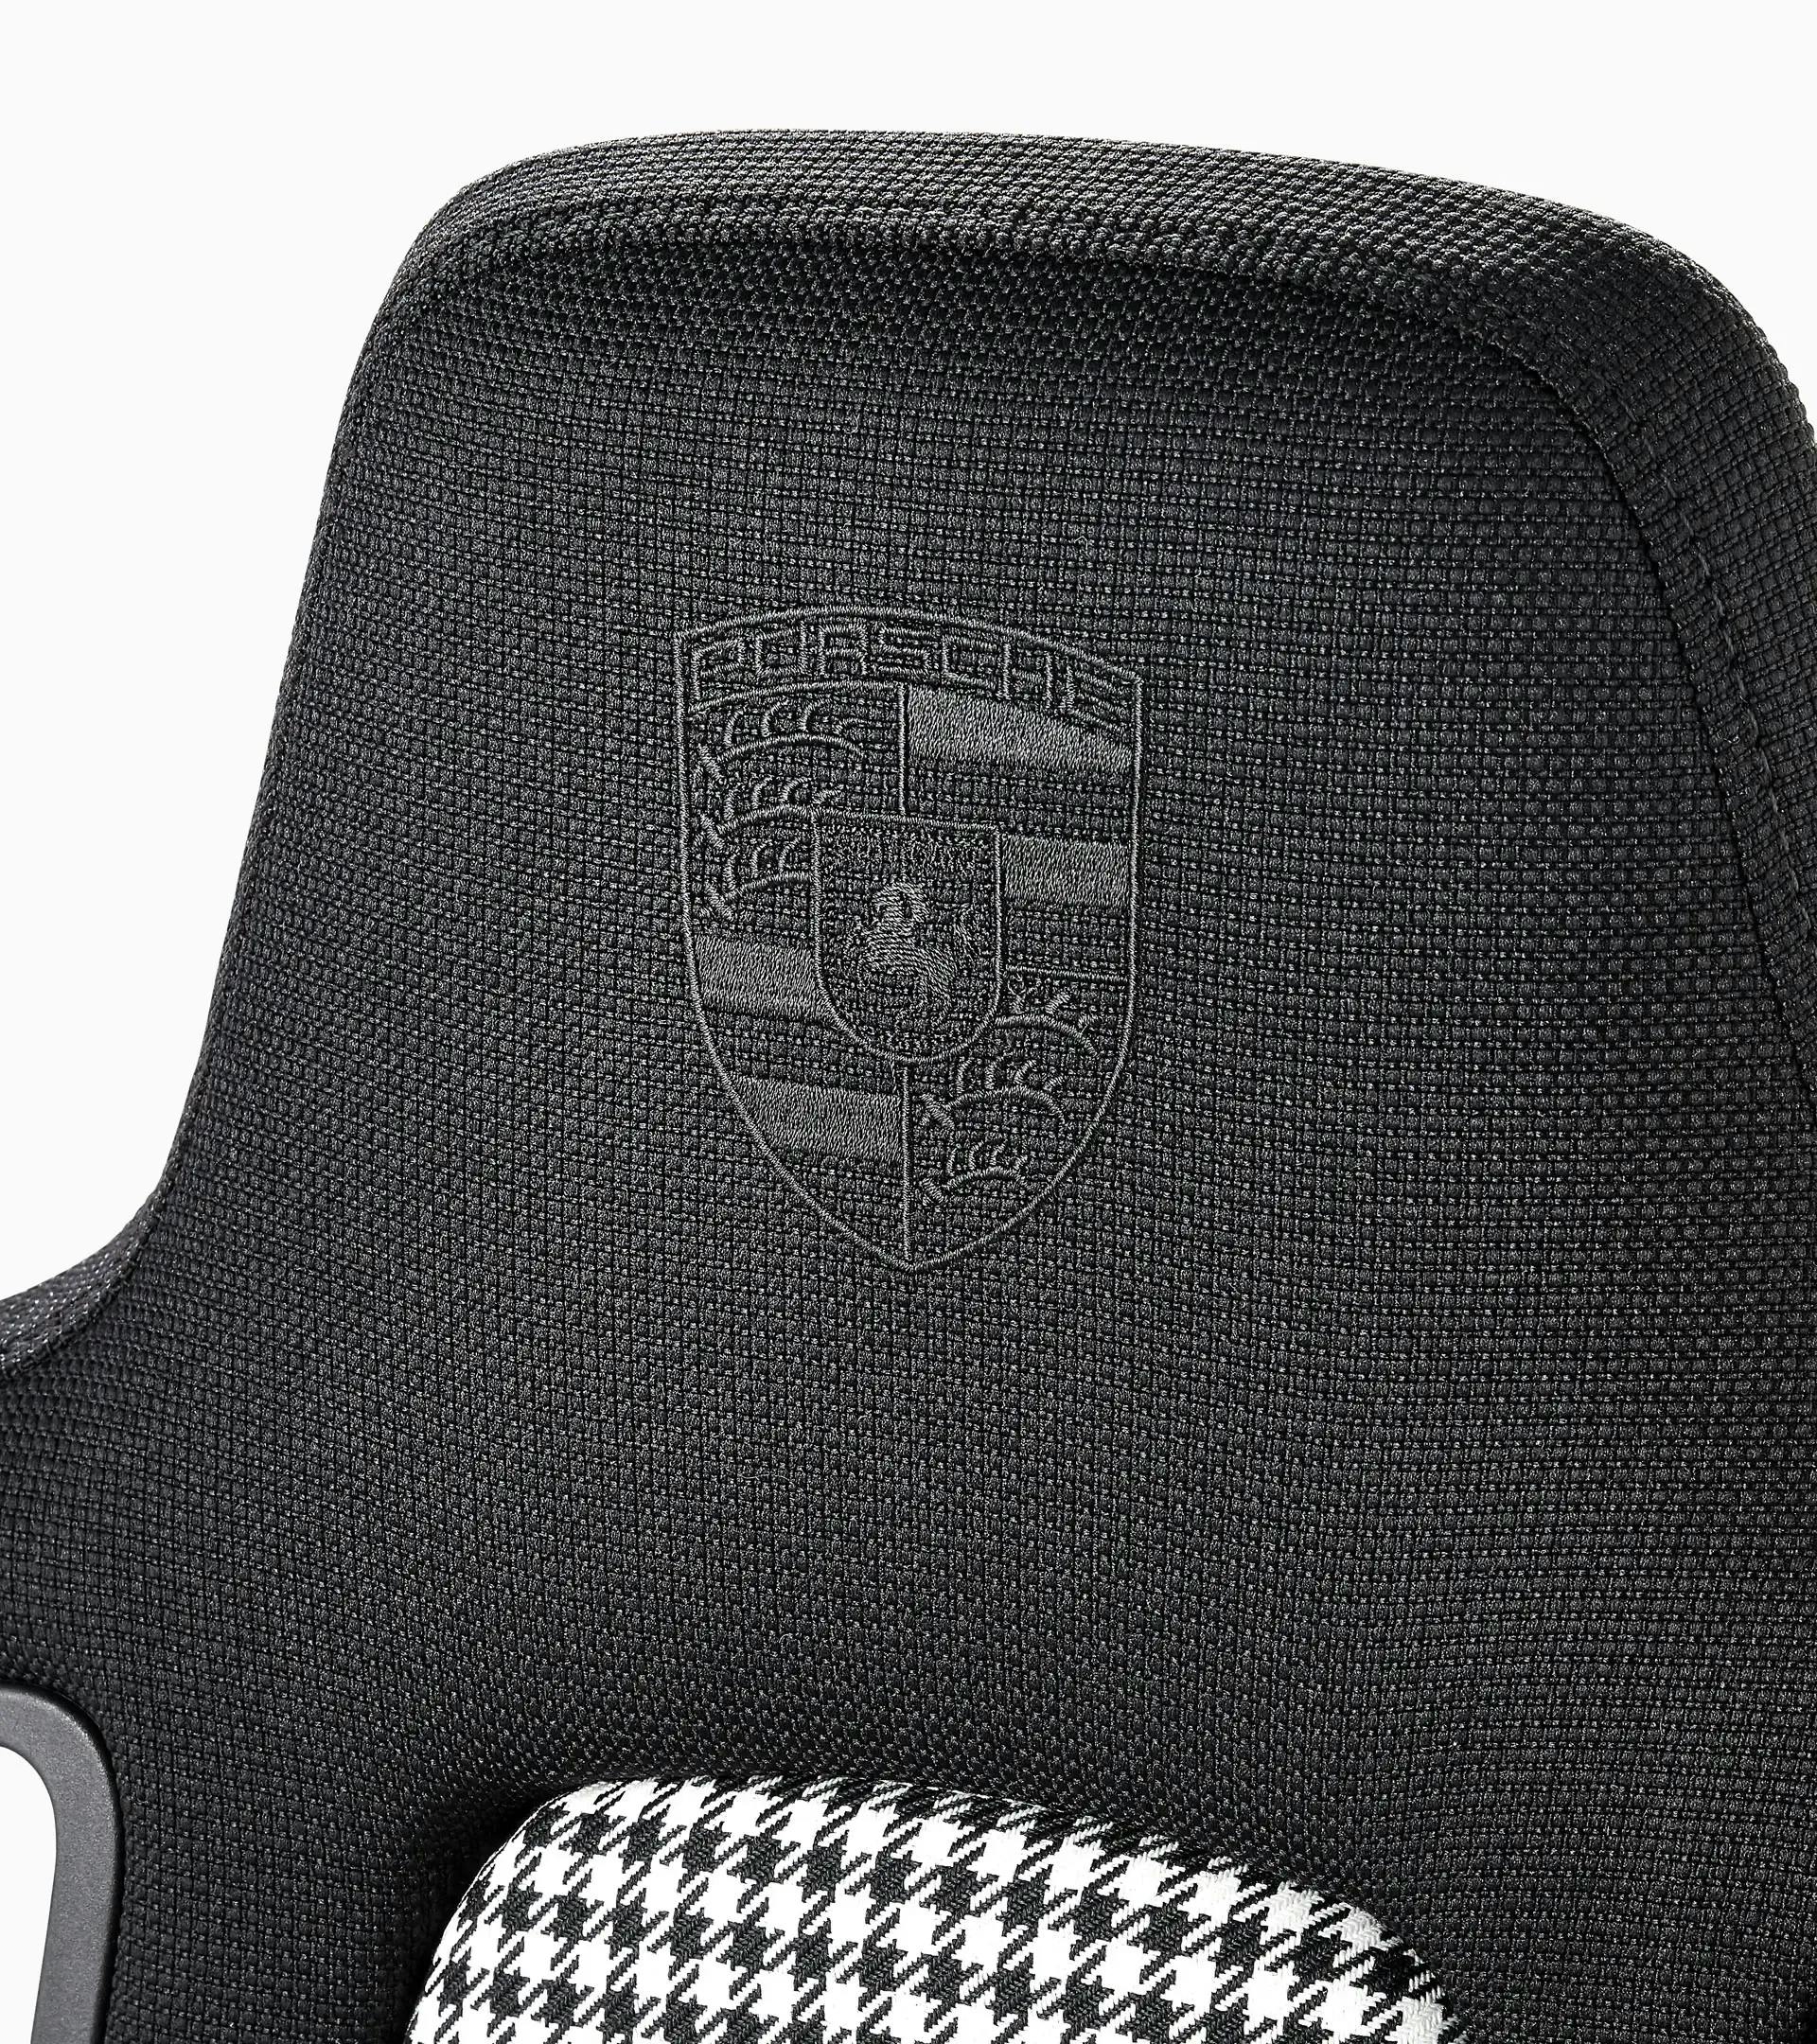 RECARO x Porsche Gaming Chair Pepita – Ltd. 3